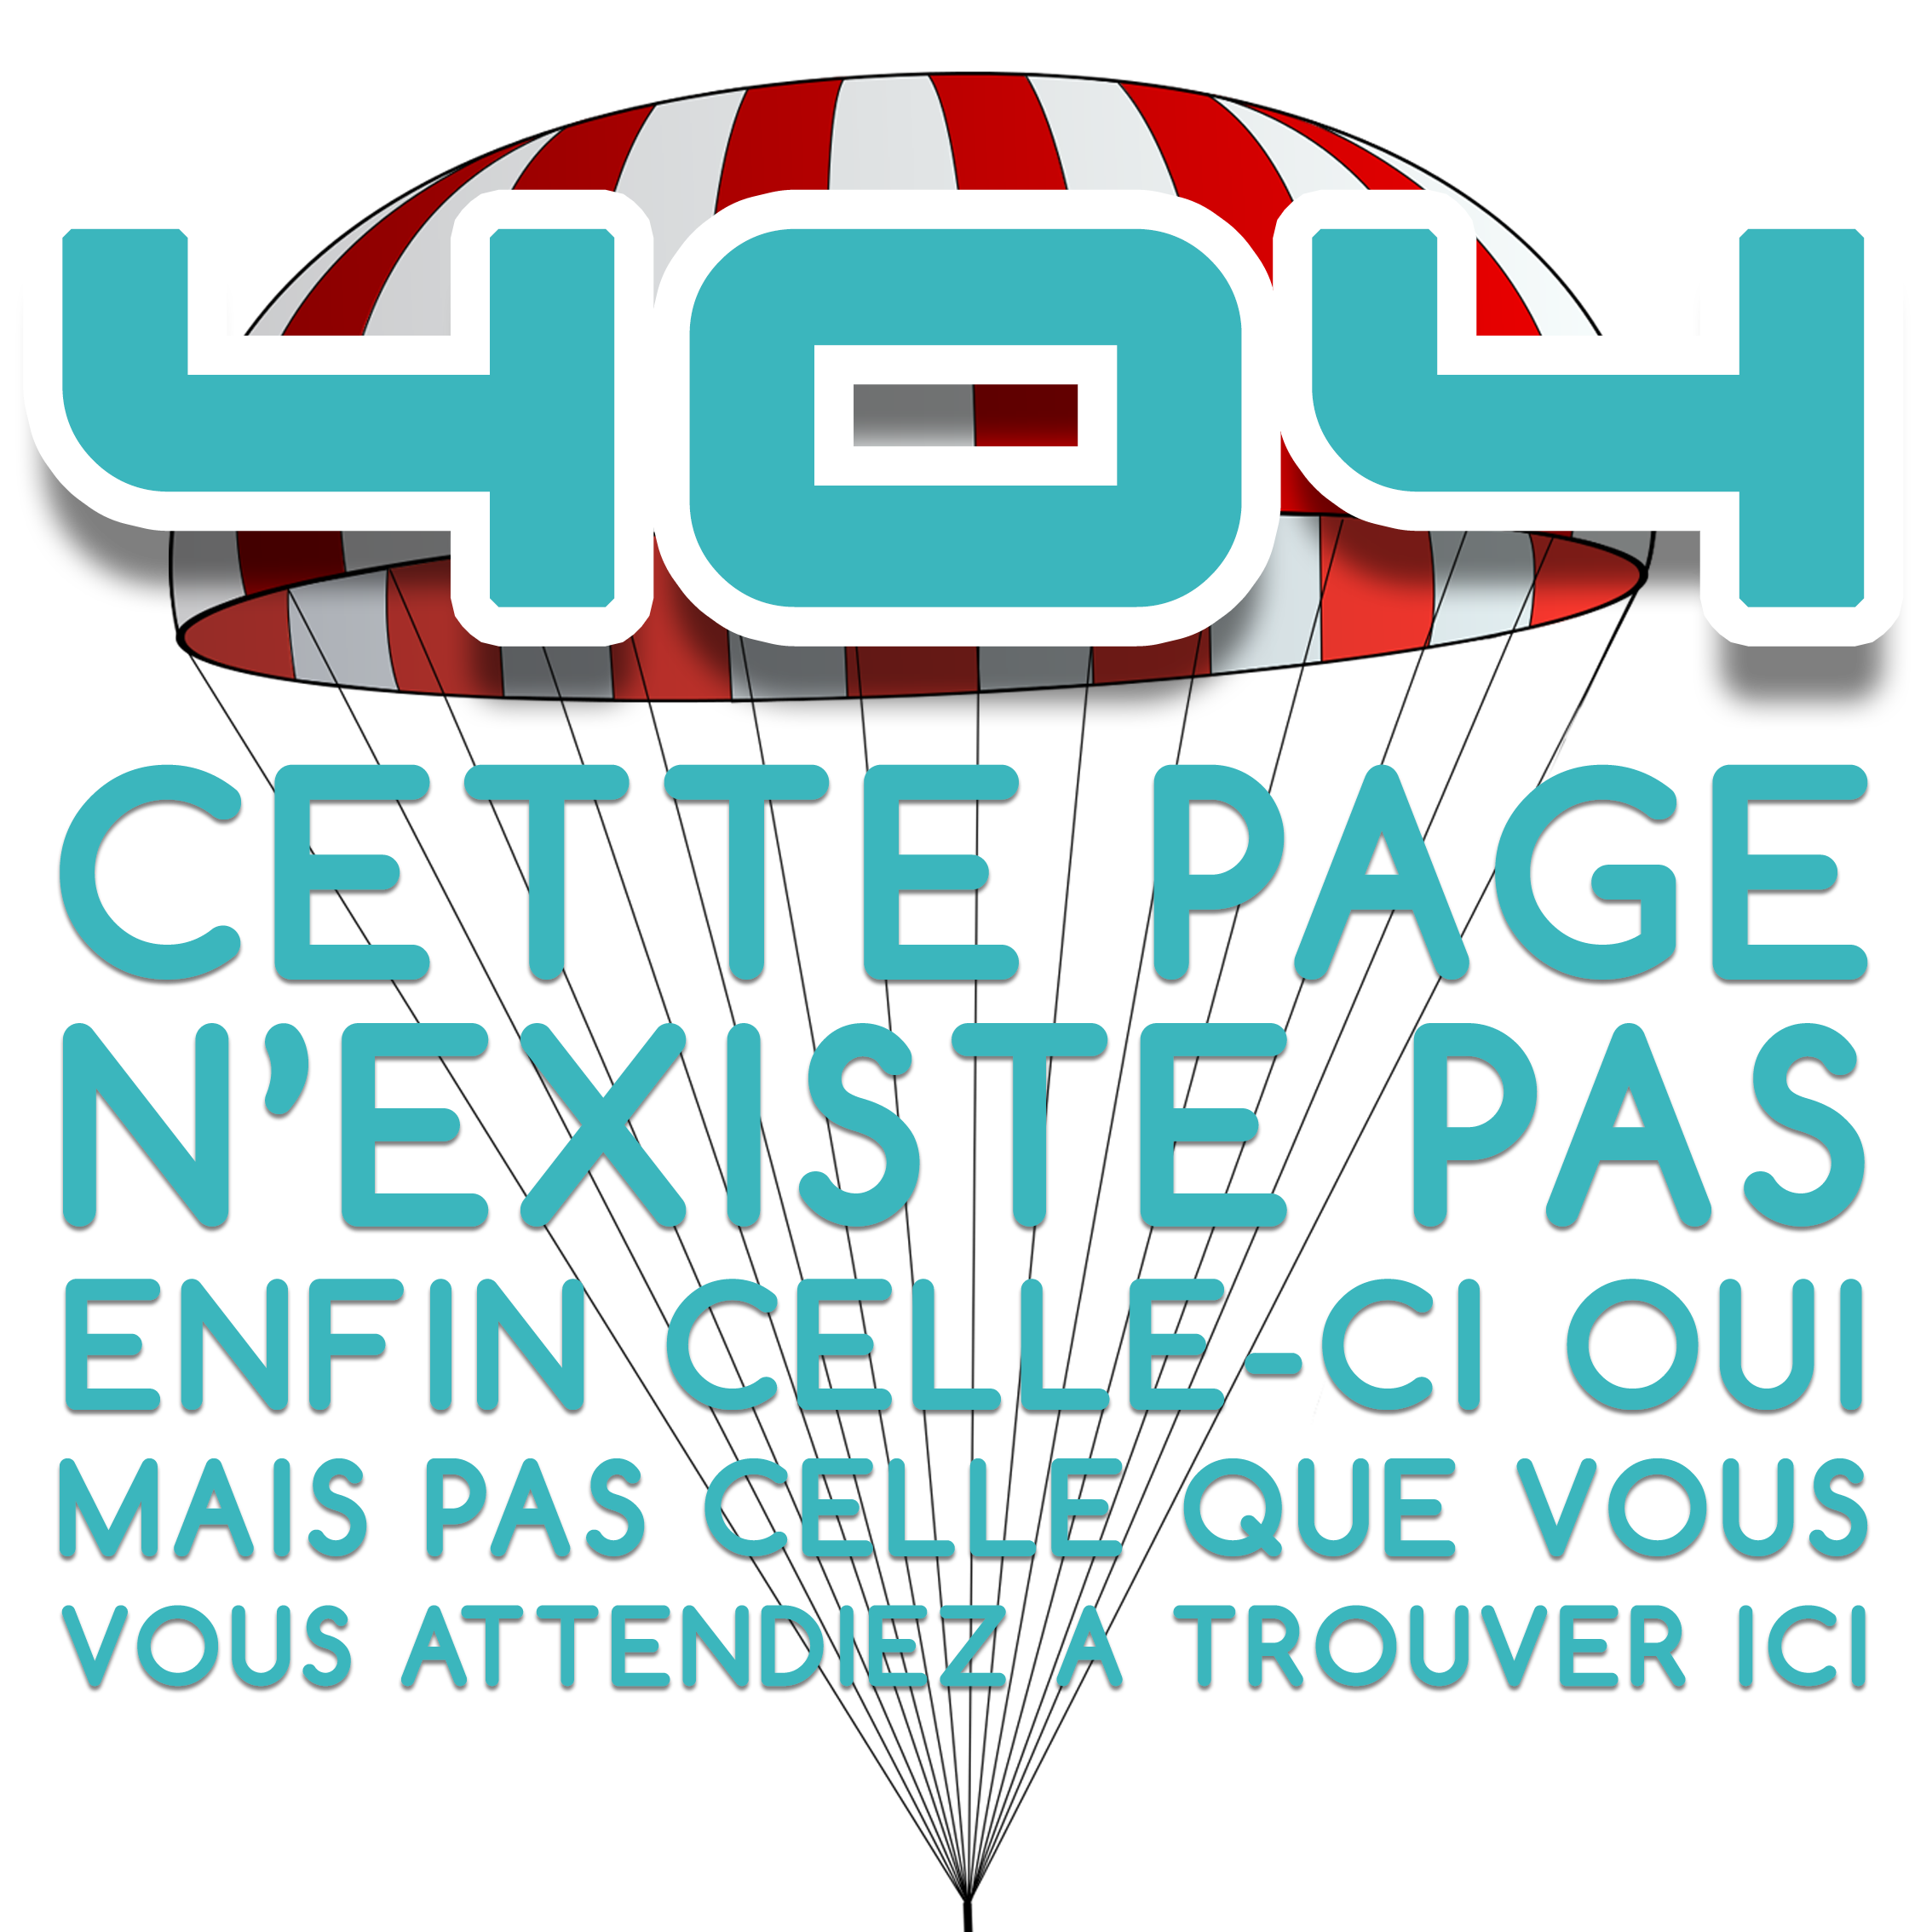 ERREUR 404 – Picardie Vol Libre